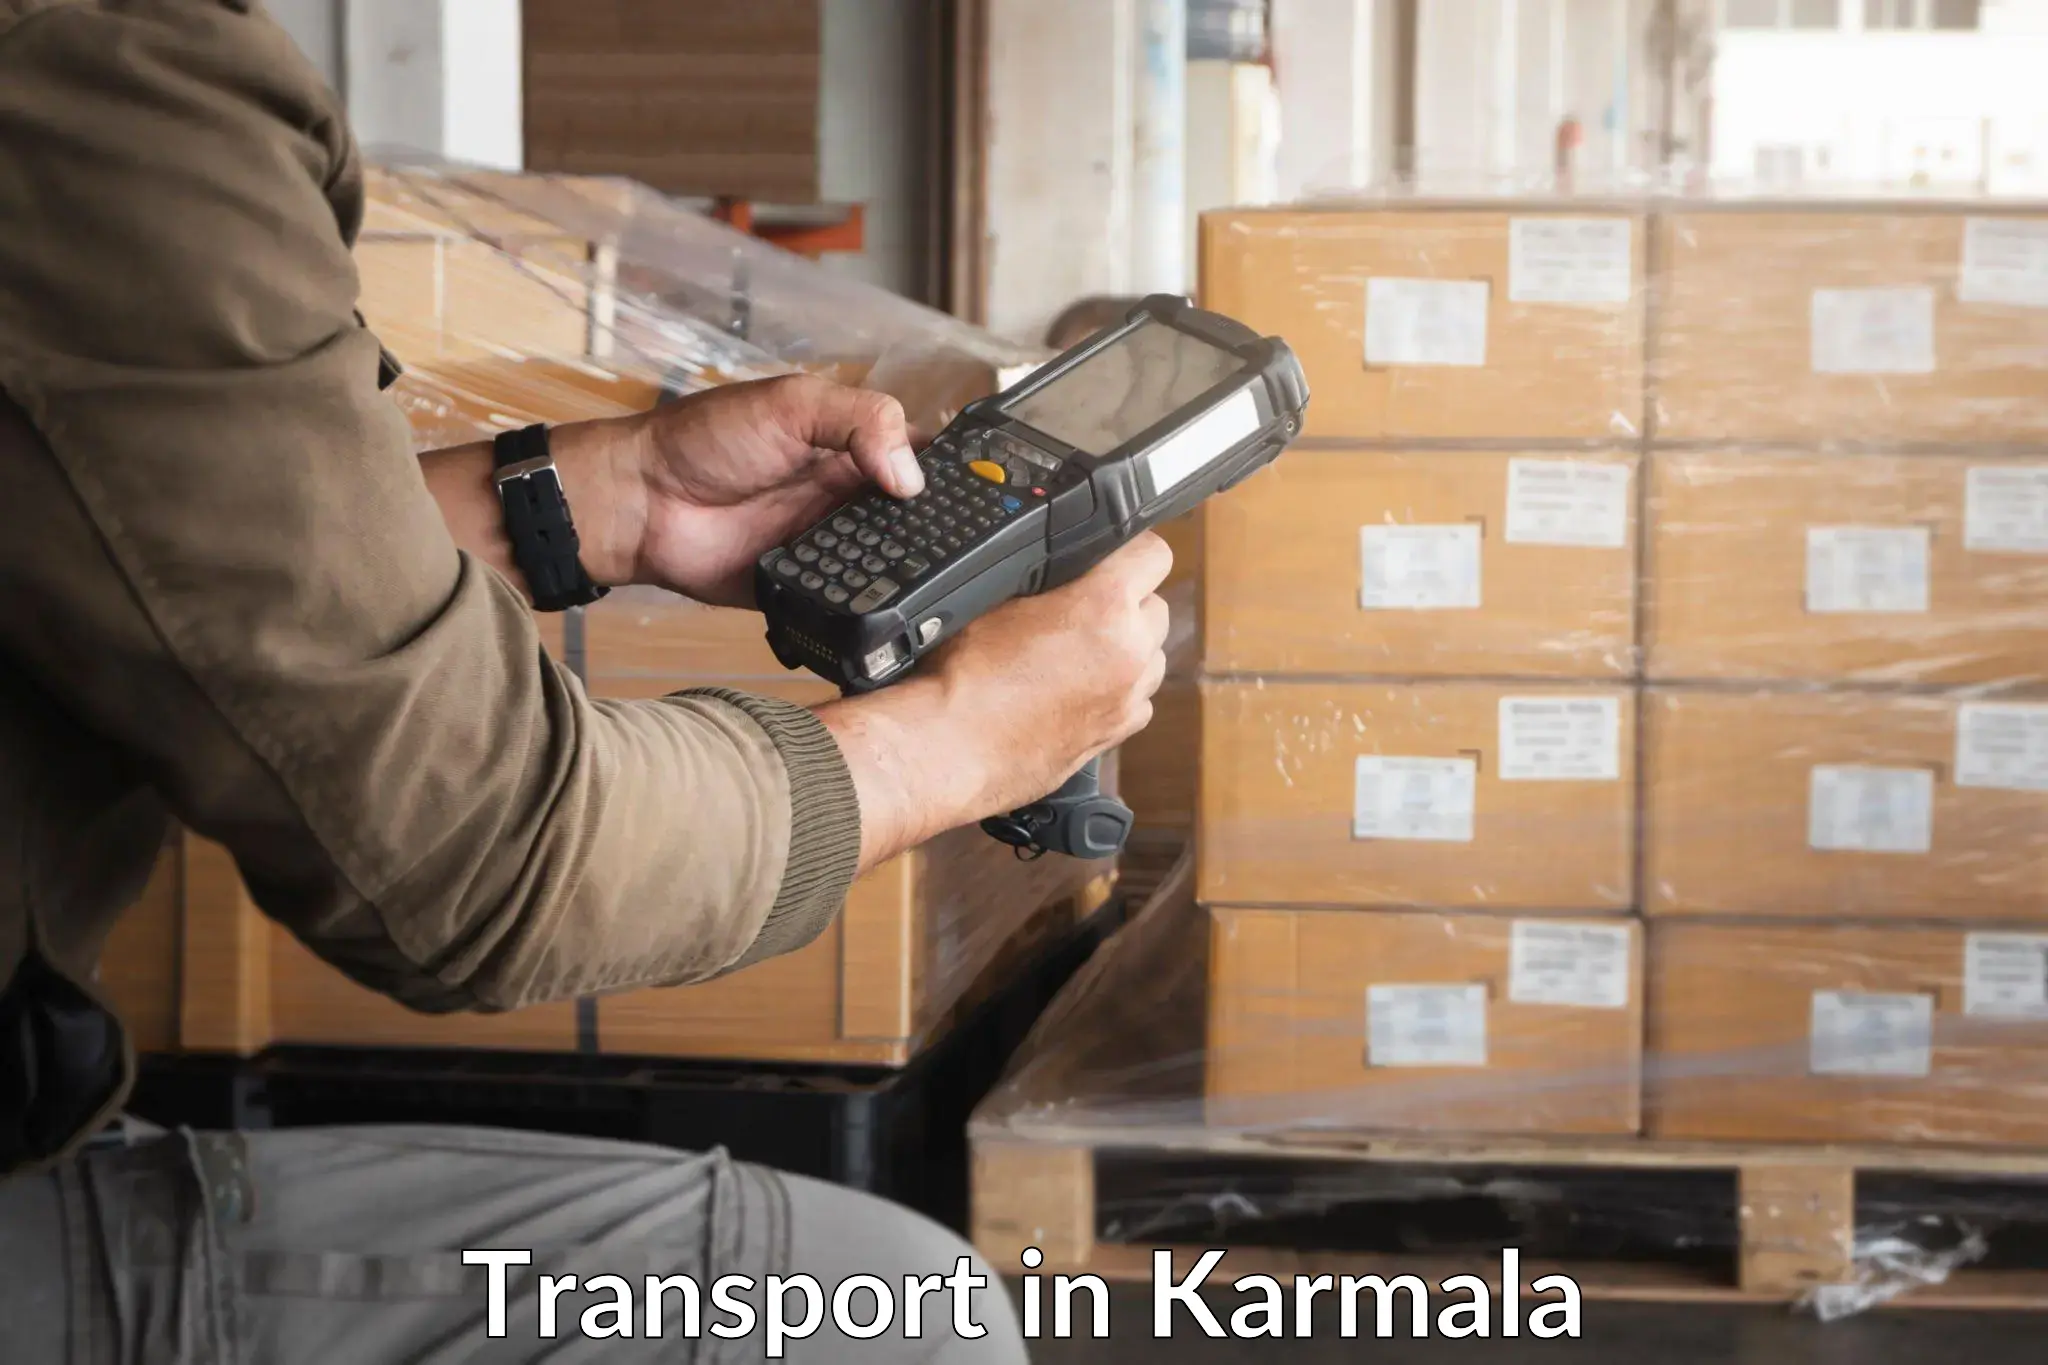 Daily parcel service transport in Karmala